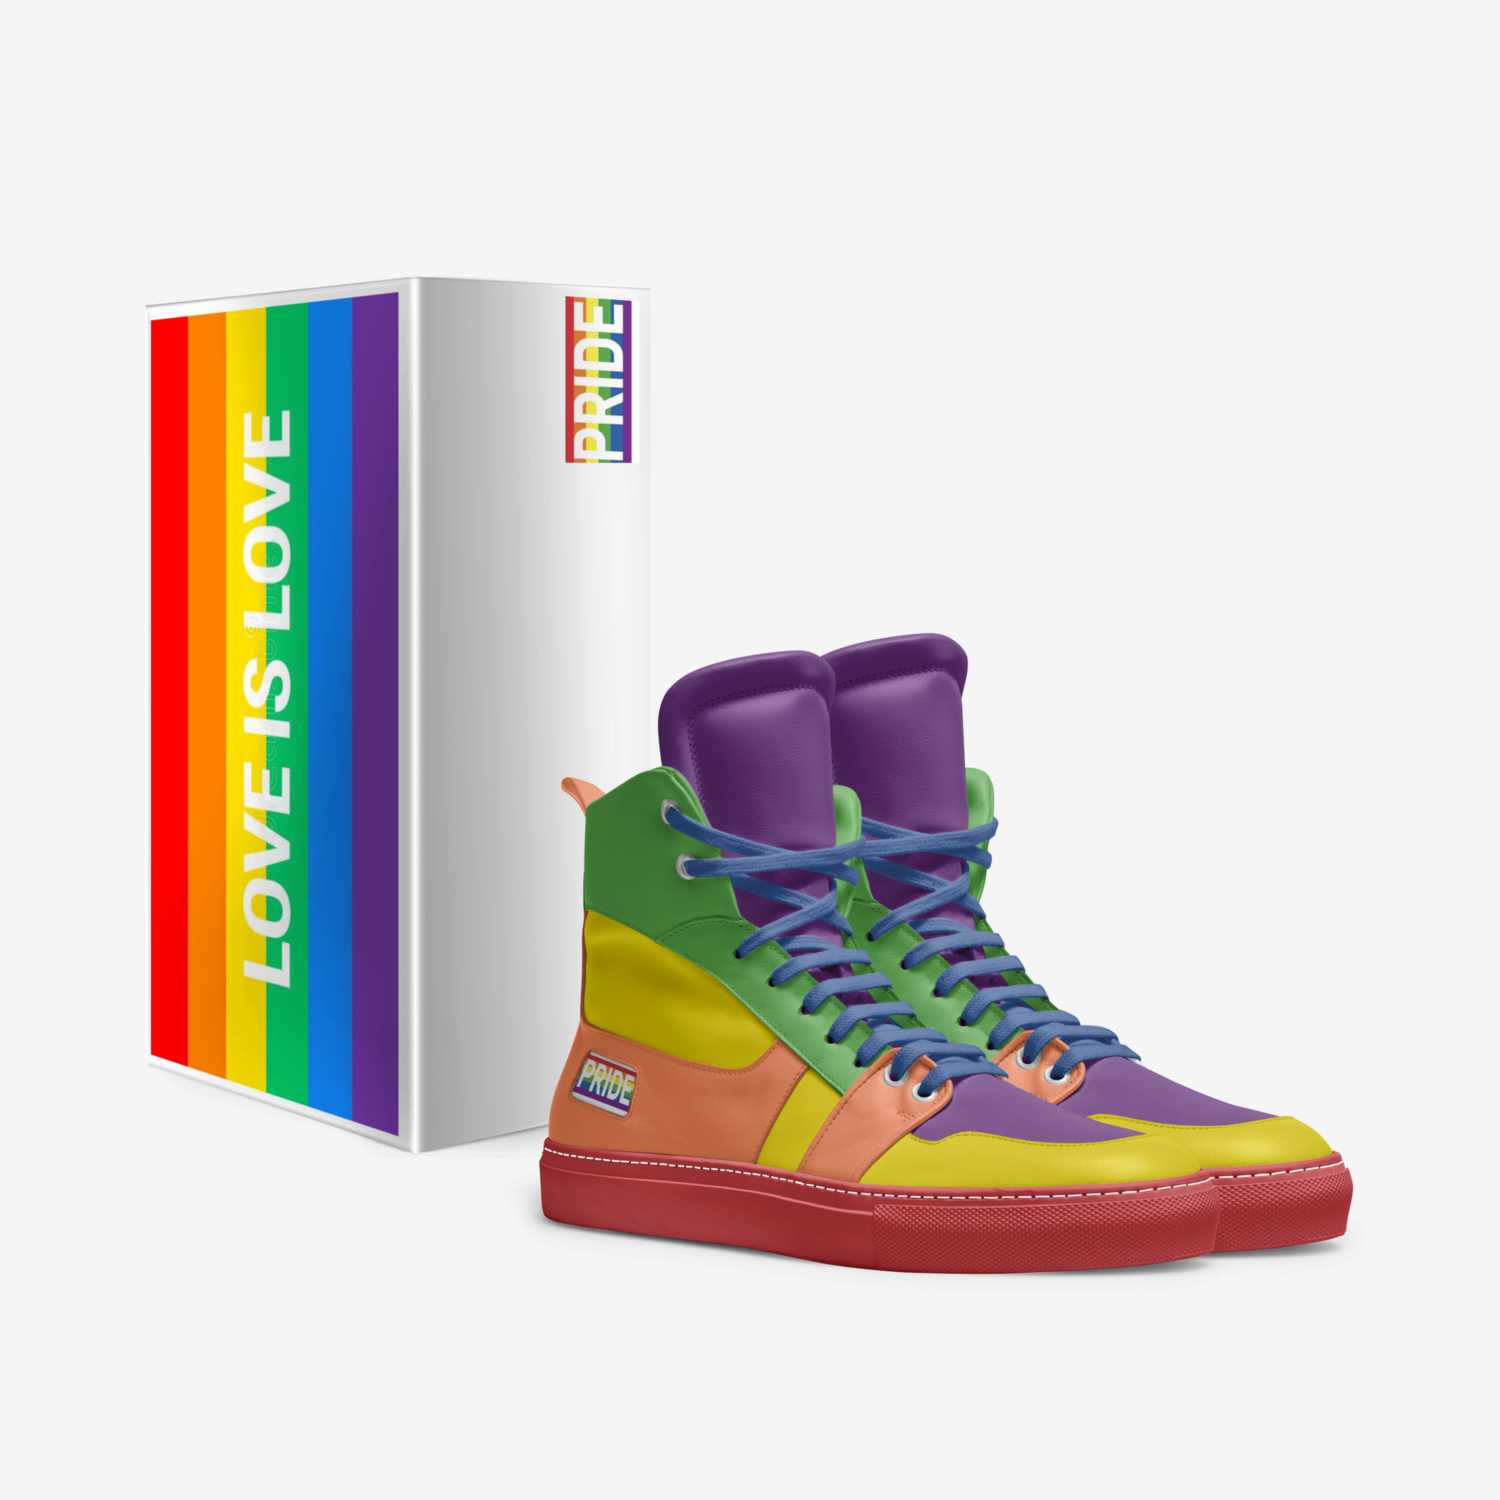 Love Rainbow custom made in Italy shoes by Dana Myers | Box view